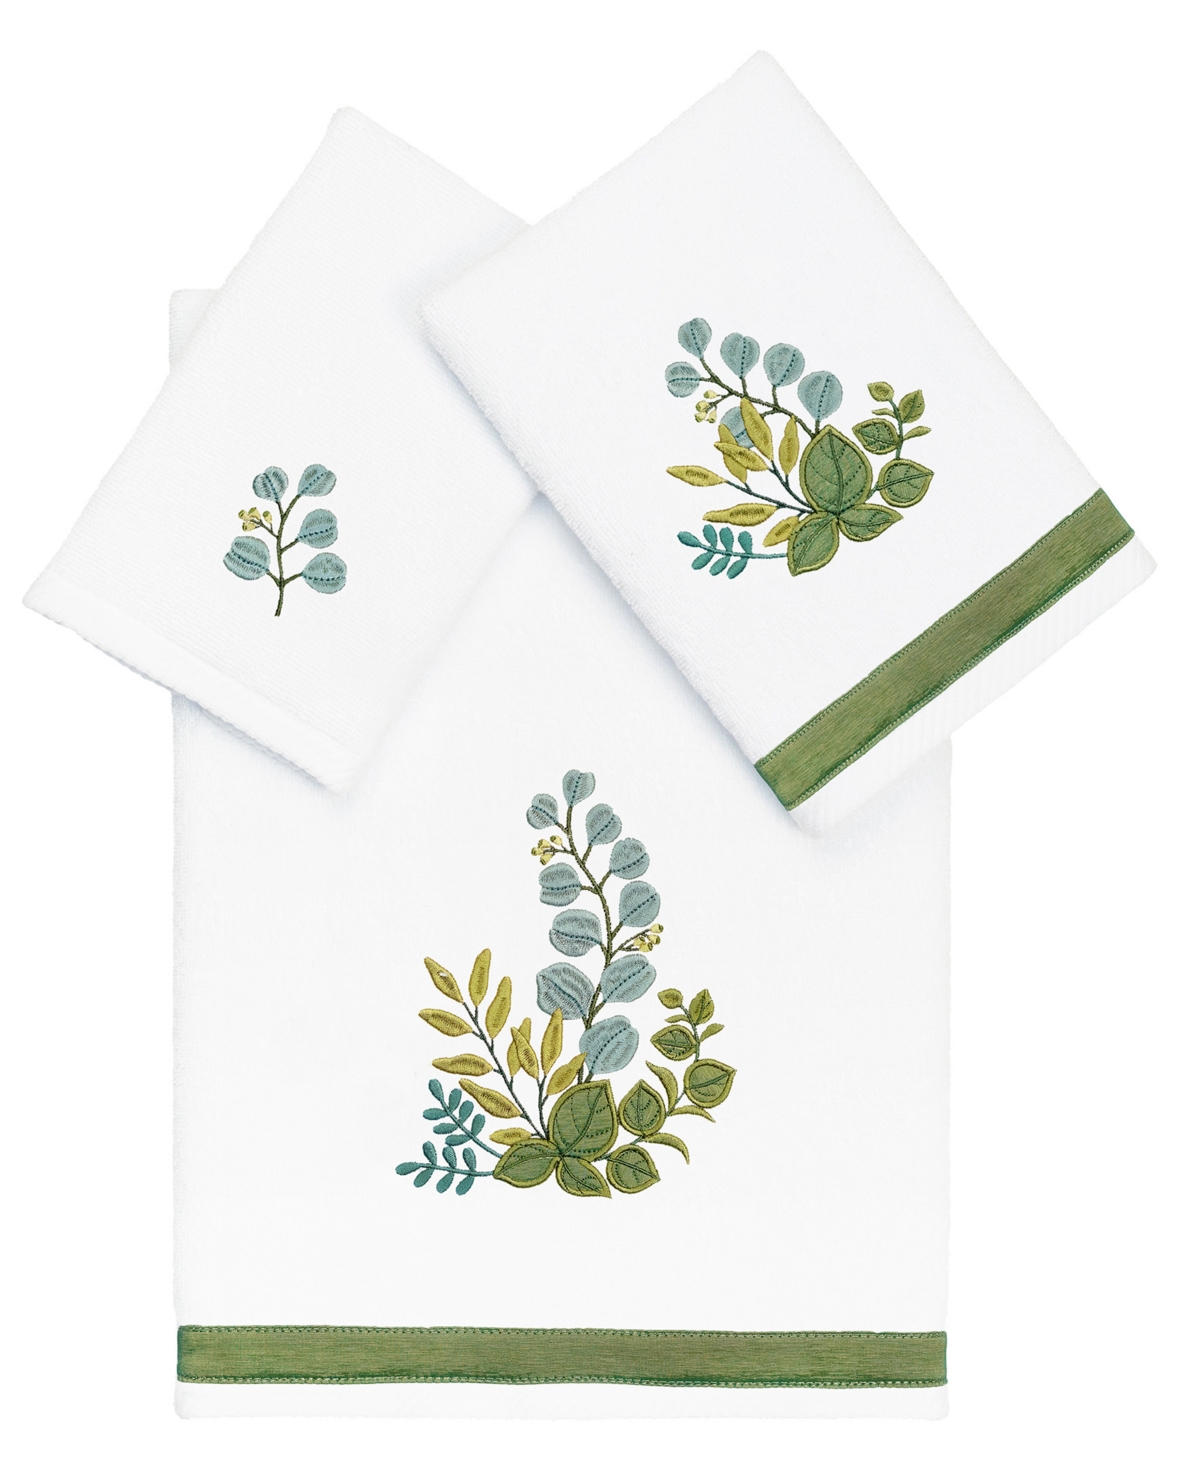 Linum Home Textiles Turkish Cotton Botanica Embellished Towel Set, 3 Piece In White